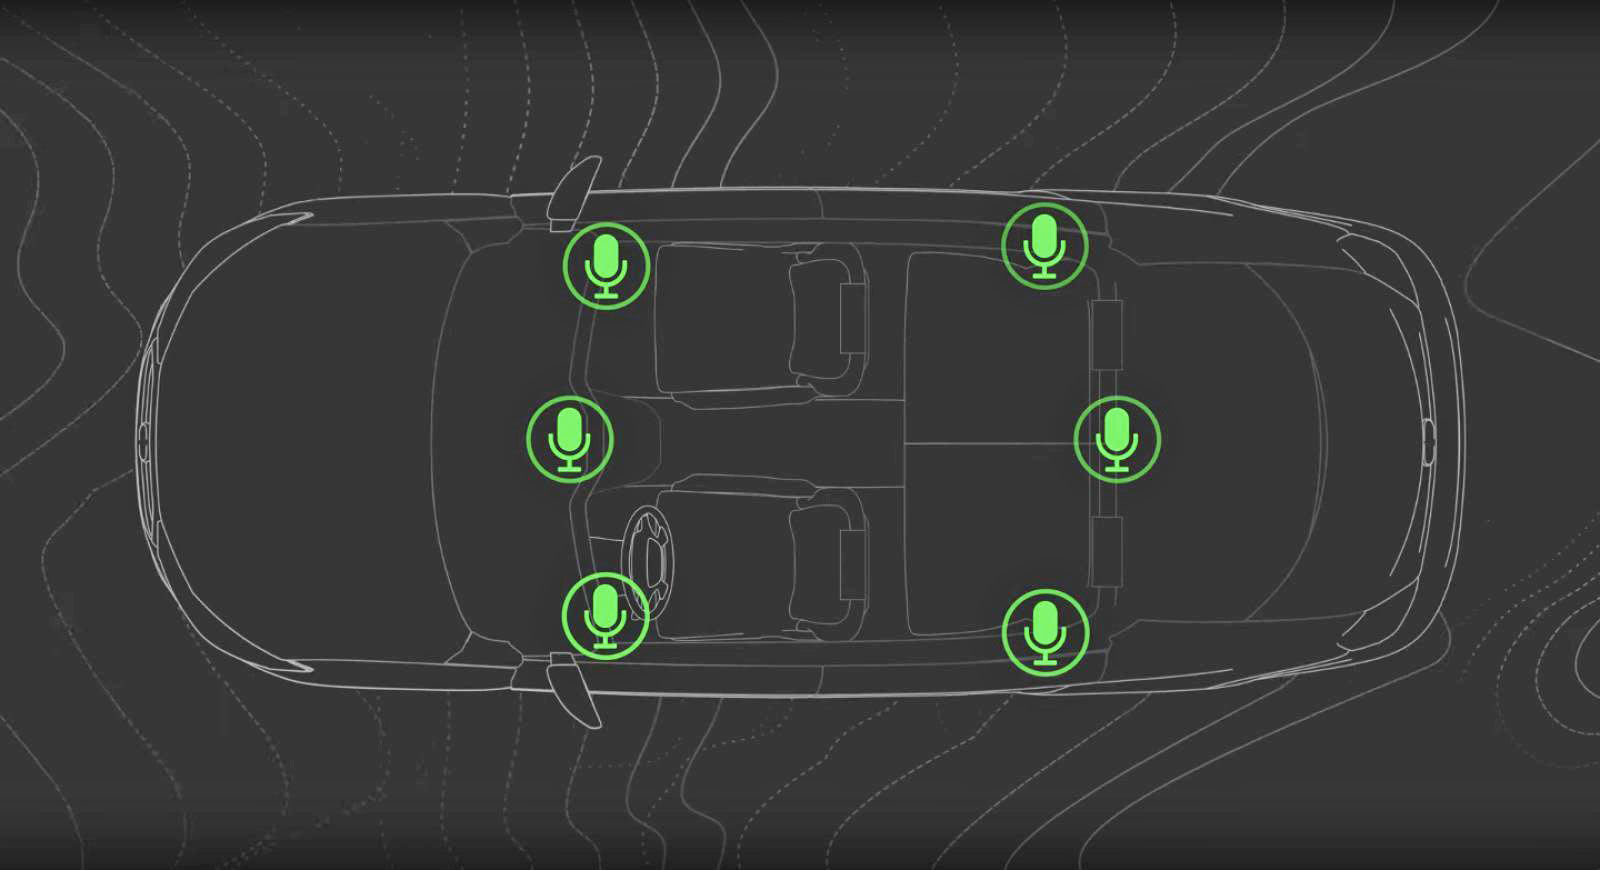 Bose 自動車の走行ノイズを消す車載音響技術 Quietcomfort Road Noise Control を発表 Engadget 日本版